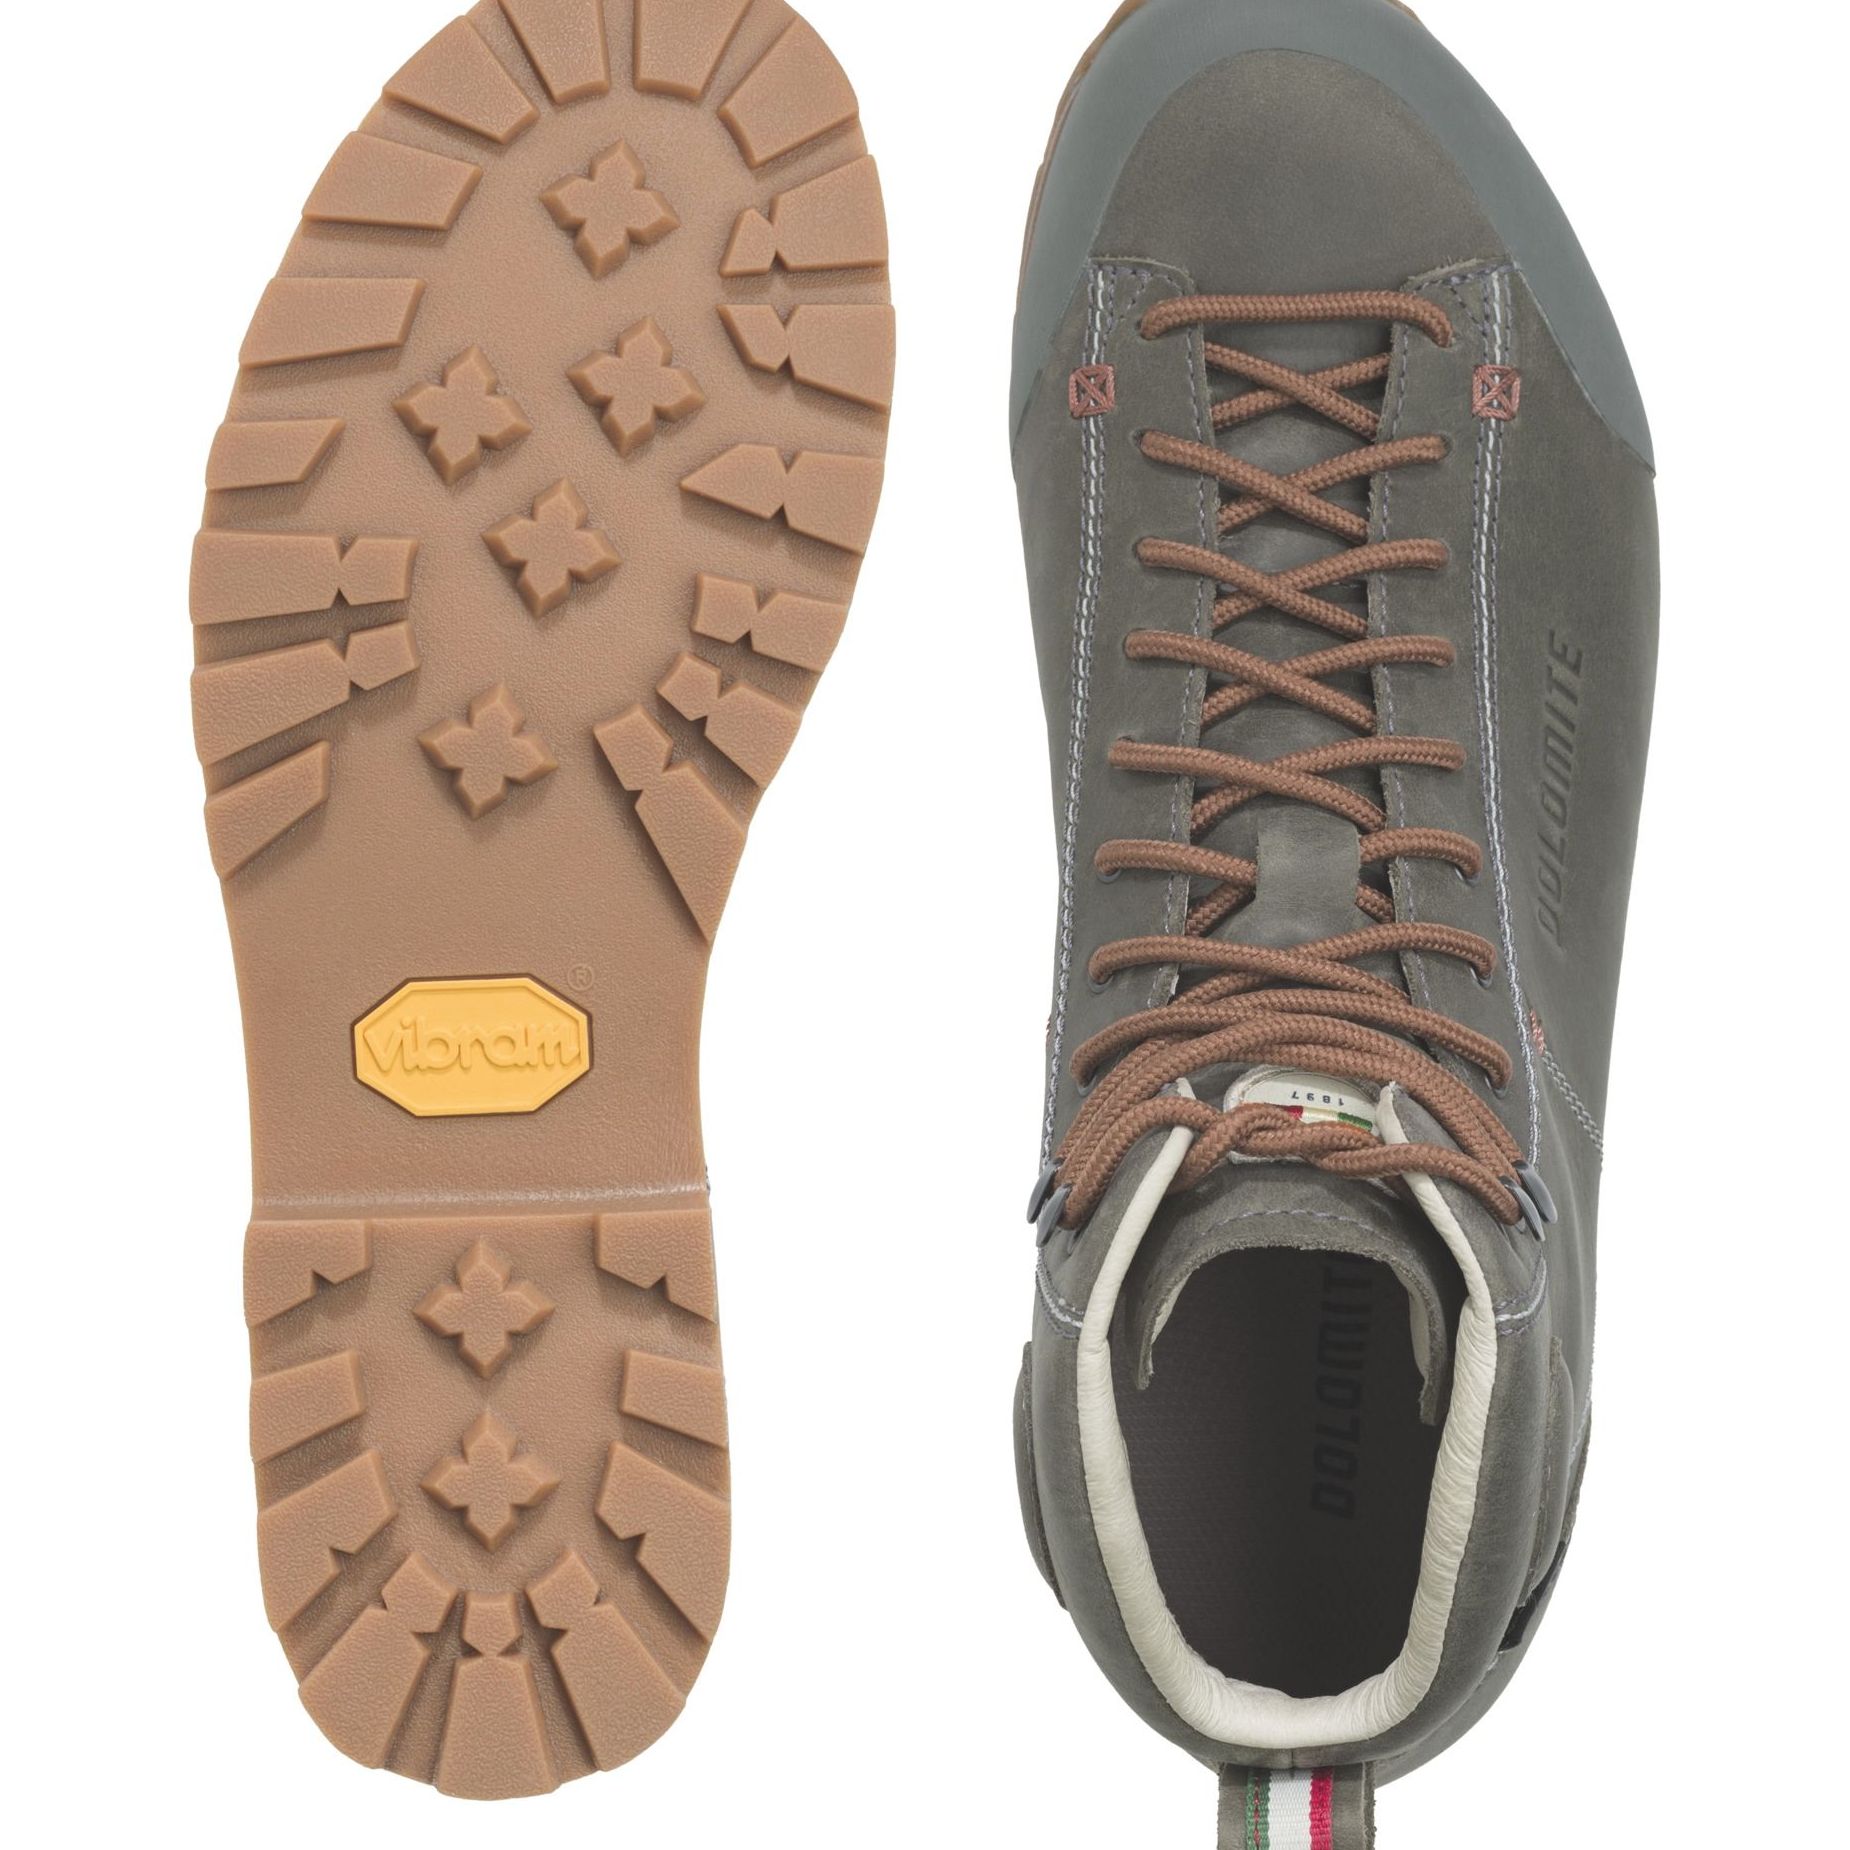 Outdoor Shoes -  dolomite 54 High Fg GTX Shoe